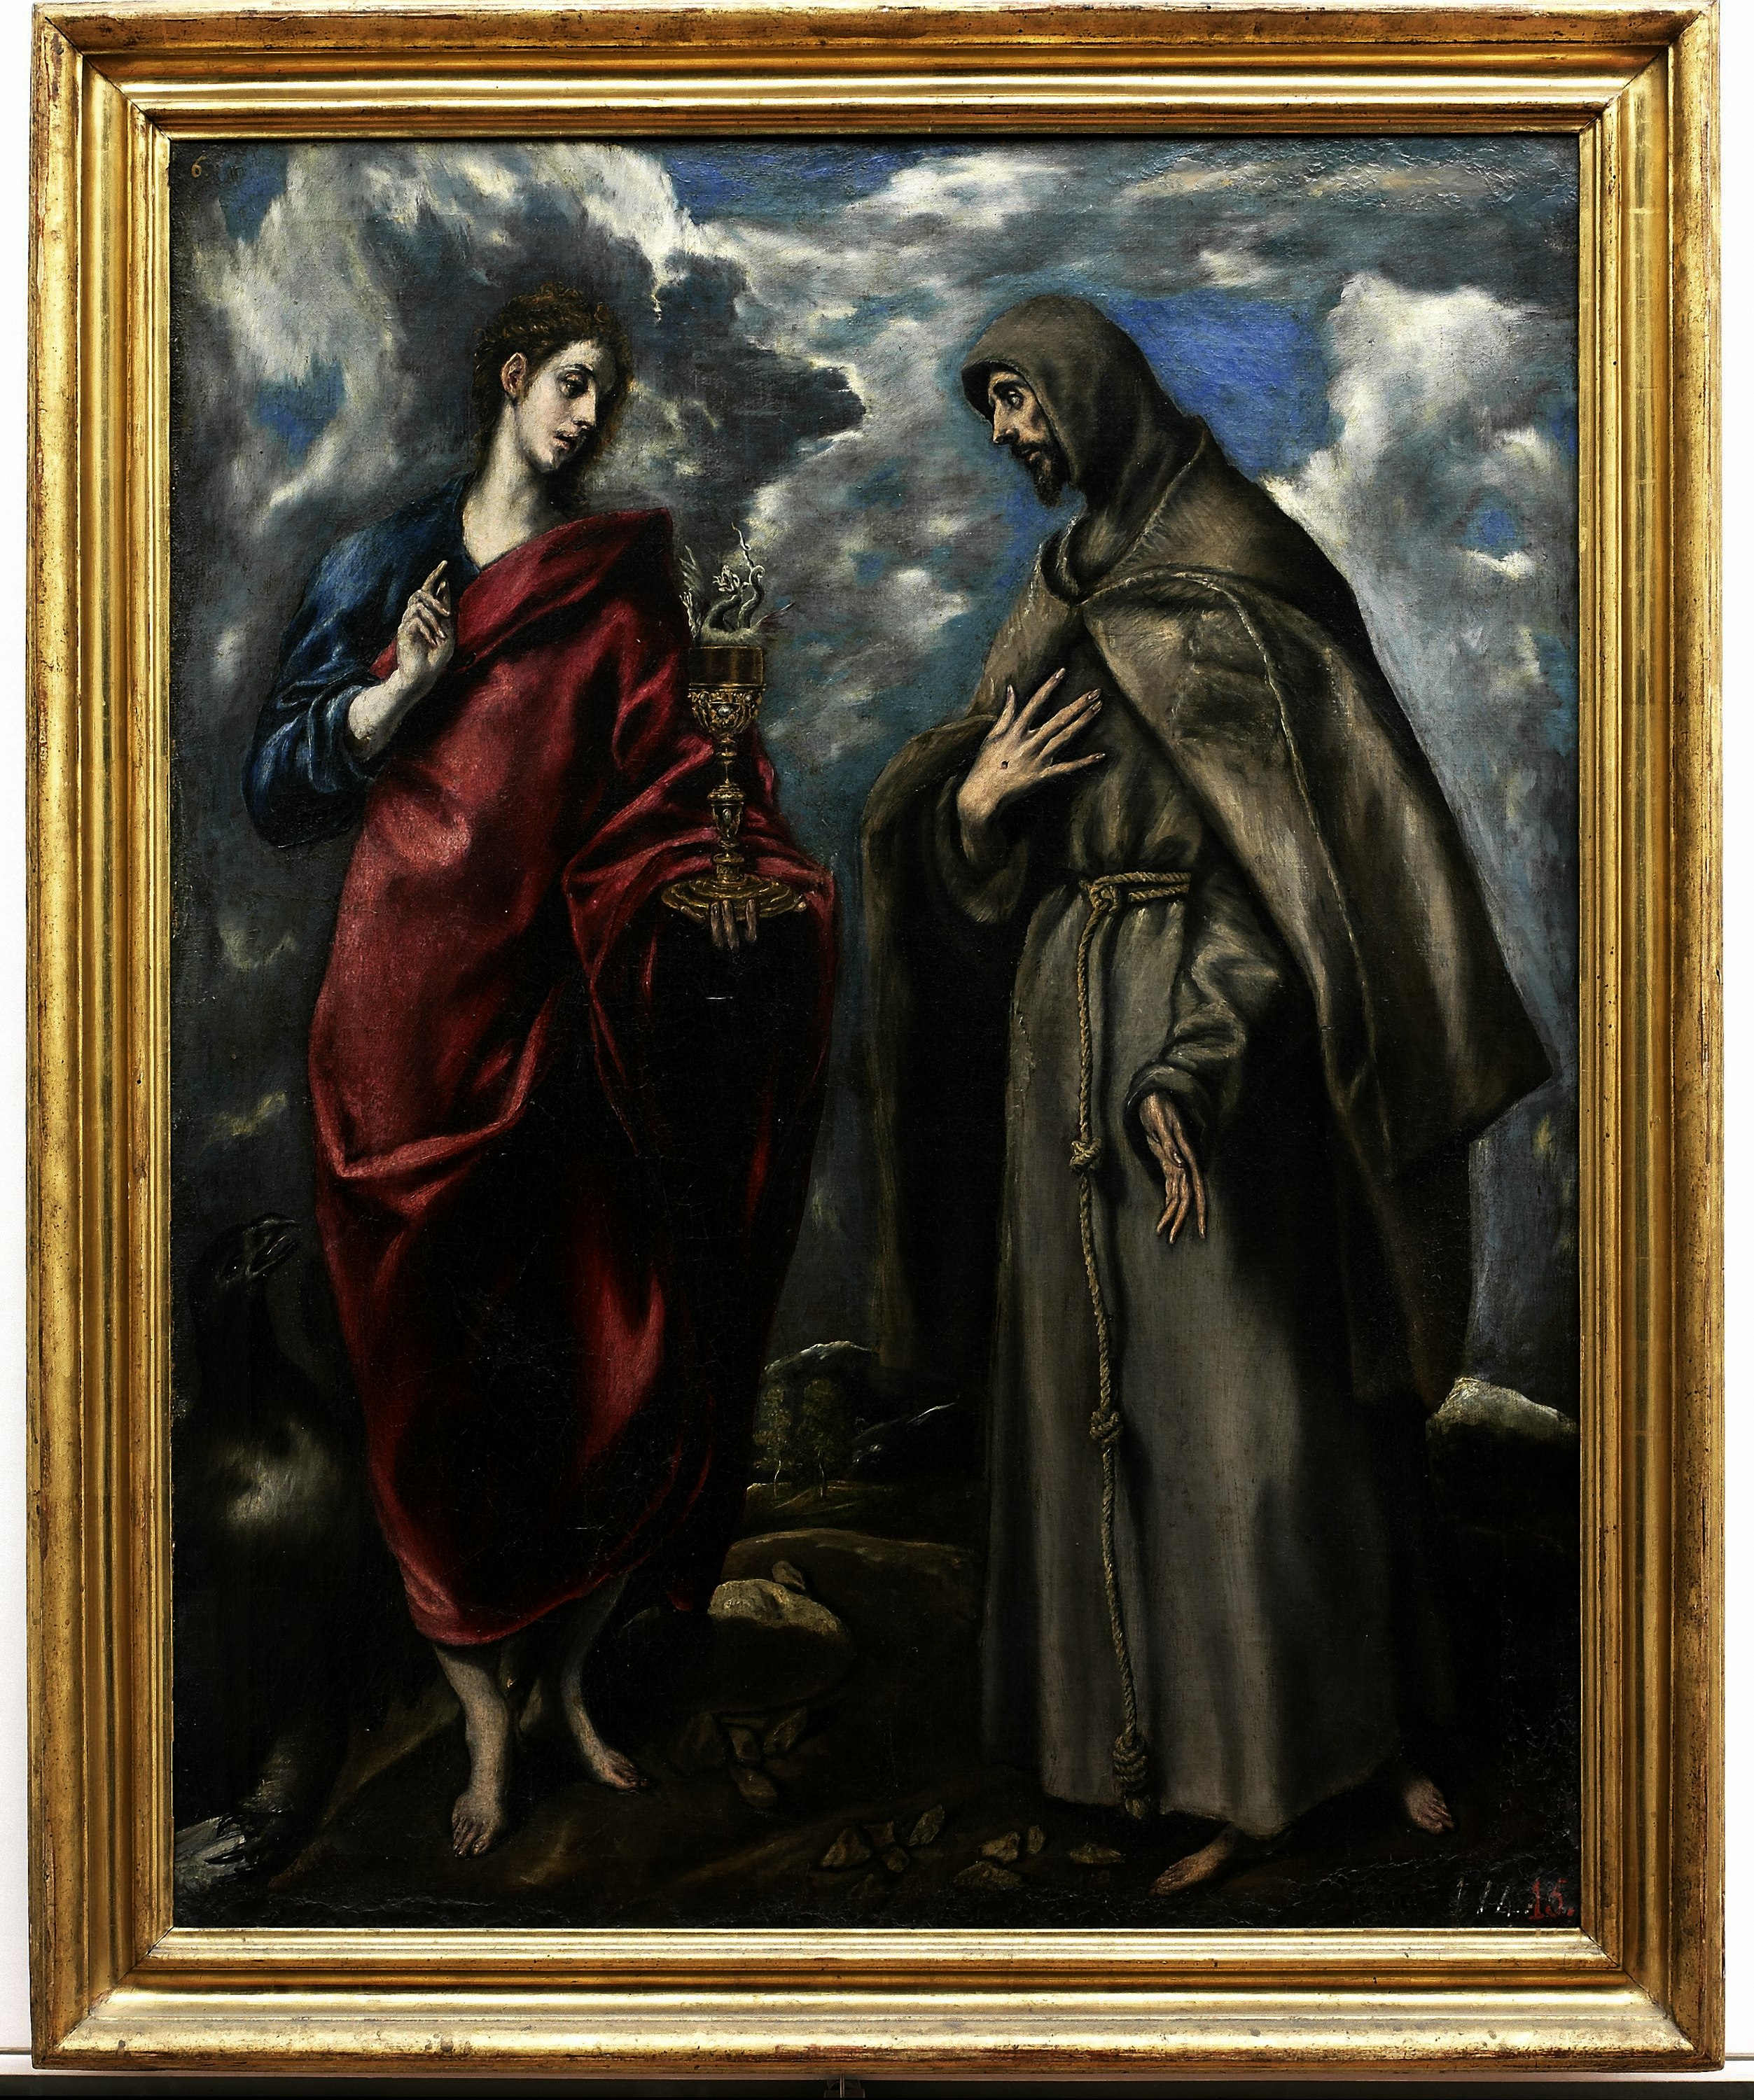 Saint John the Evangelist and Saint Francis